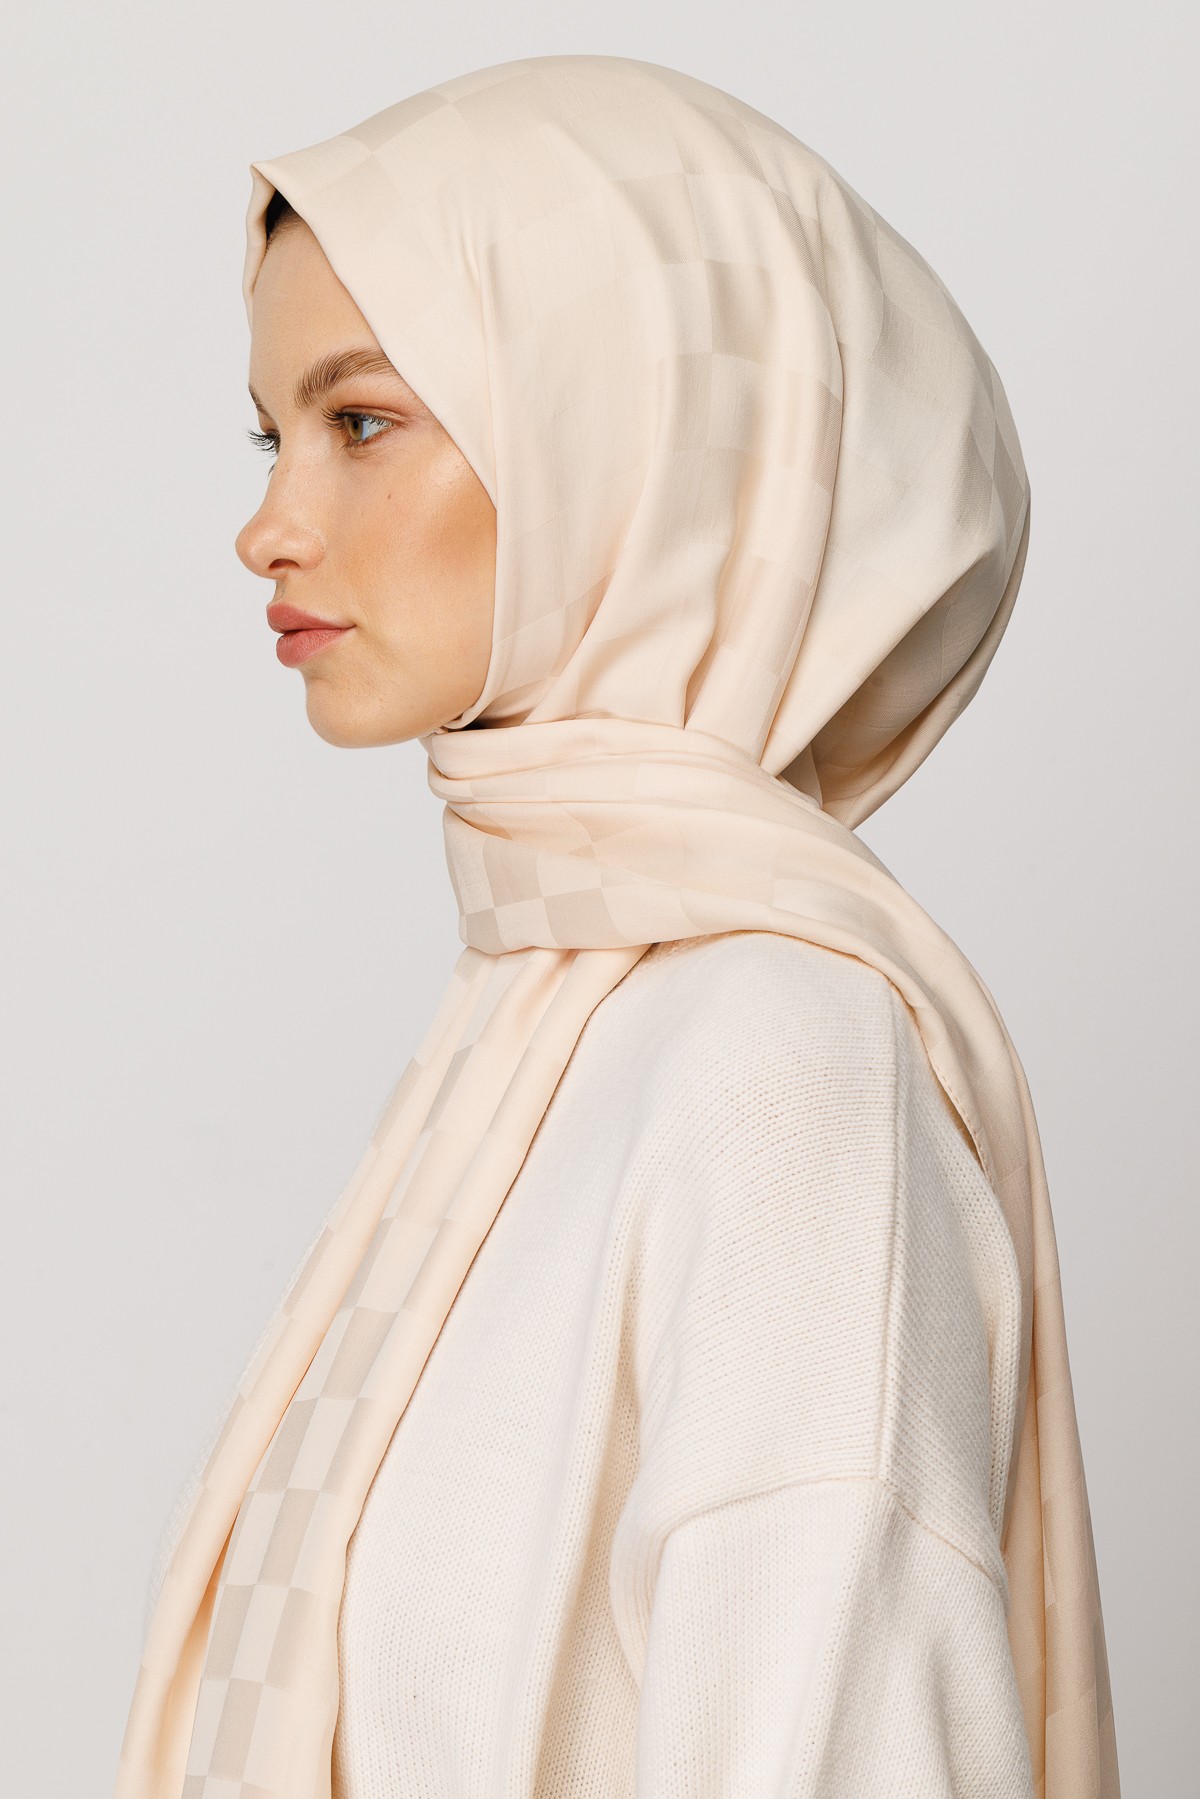 Checkers Pattern Silk Jacquard Hijab